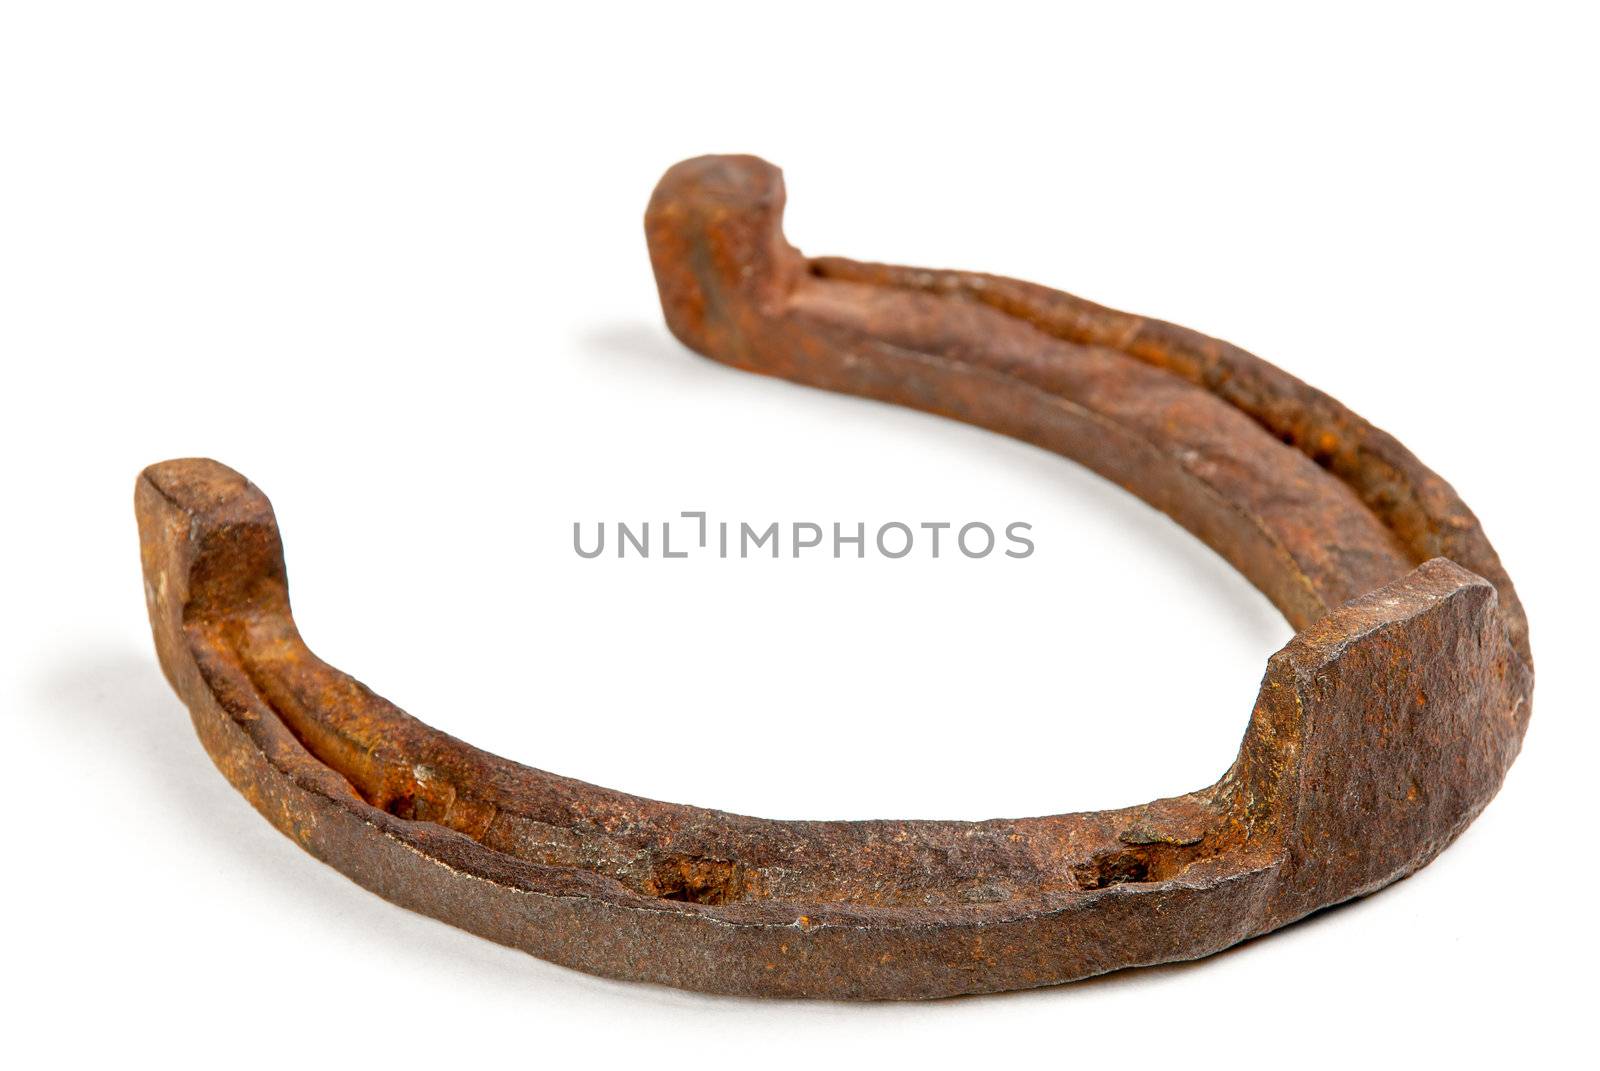 One old rusty horseshoe on a white background